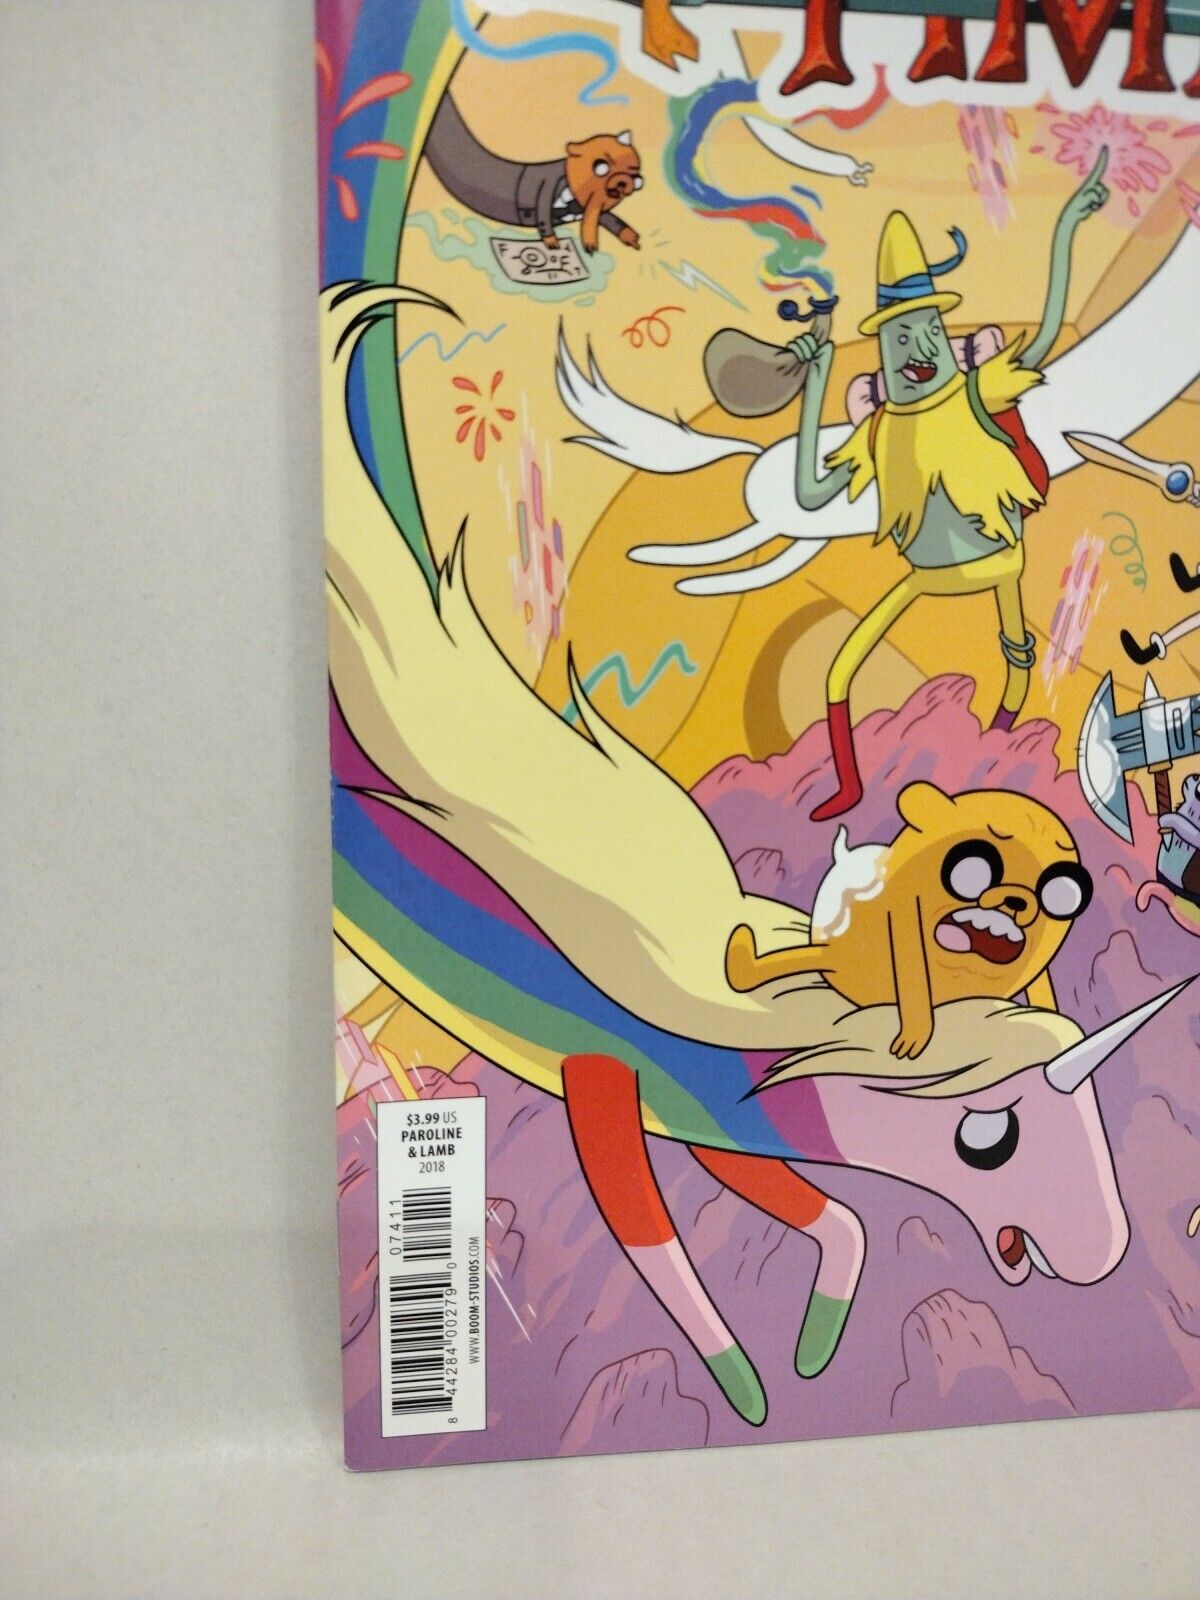 Adventure Time 74 (2018) Boom Studios Comic Cover A VF-NM